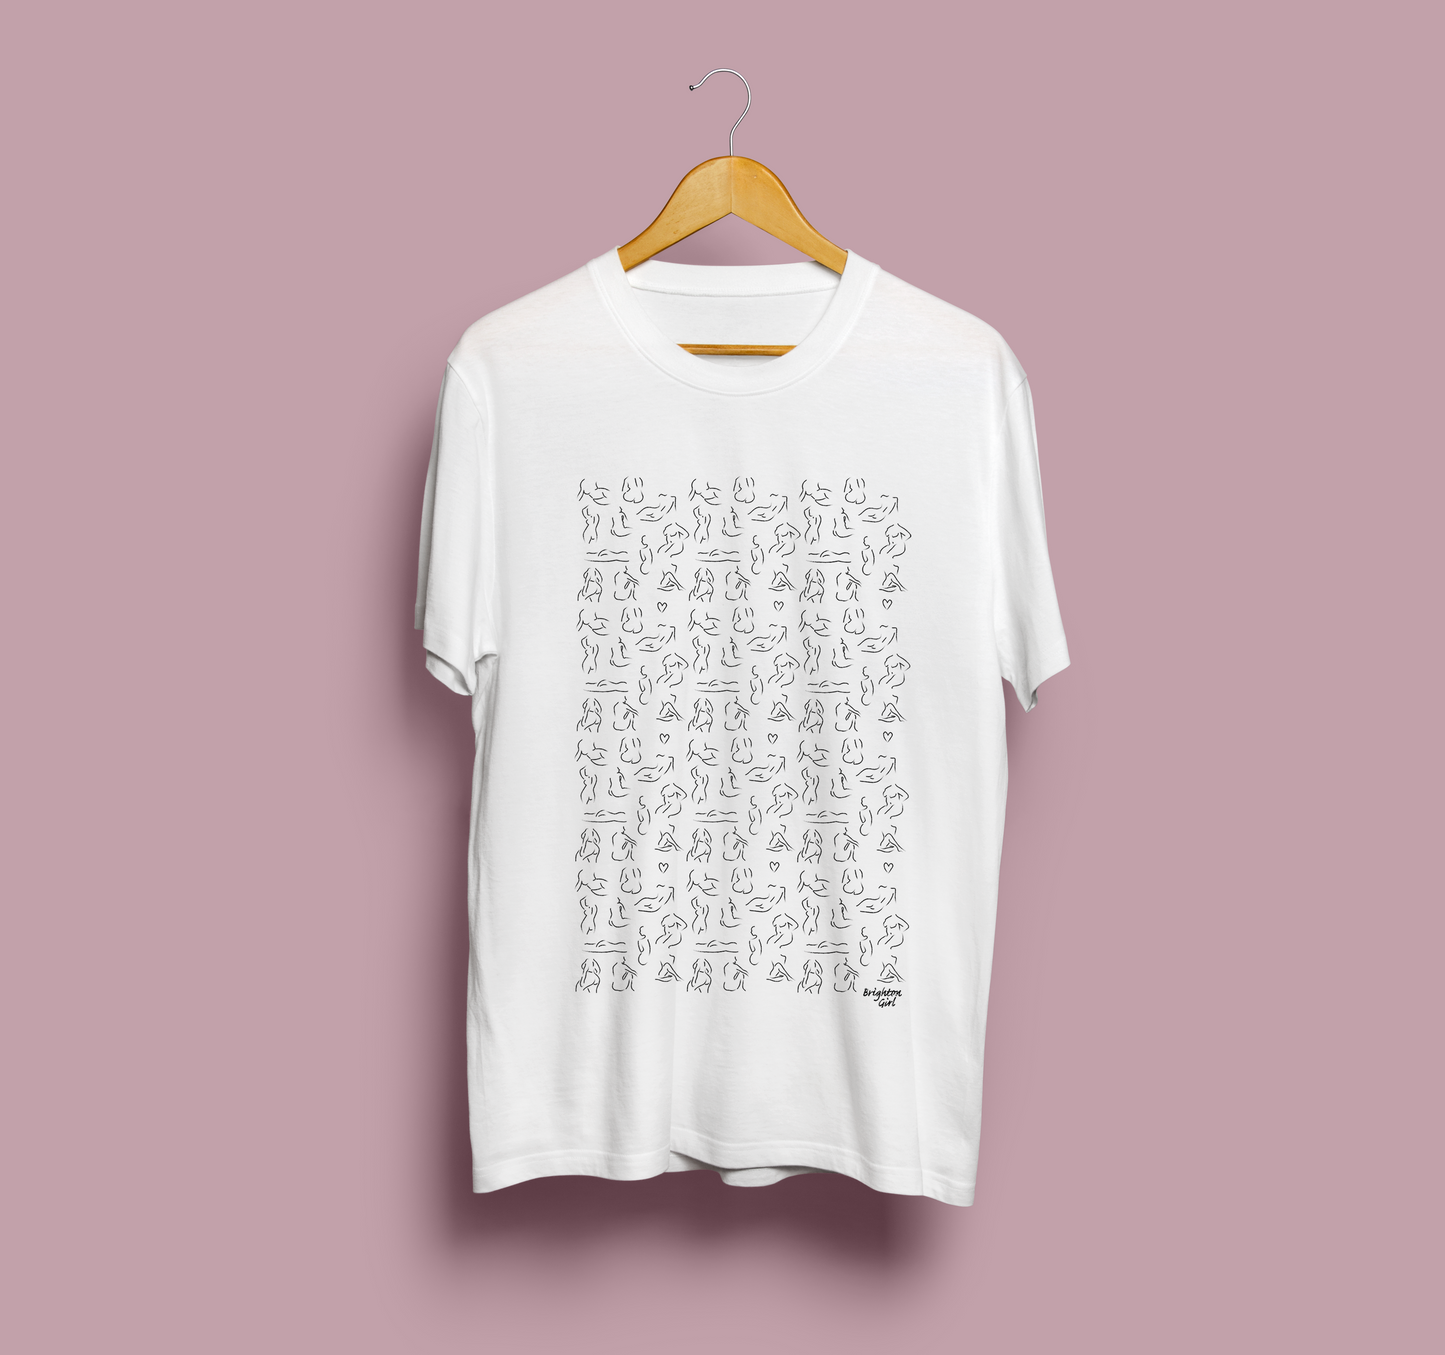 Brighton Girl Teeshirt - Ella Hunter design (Adult Size)